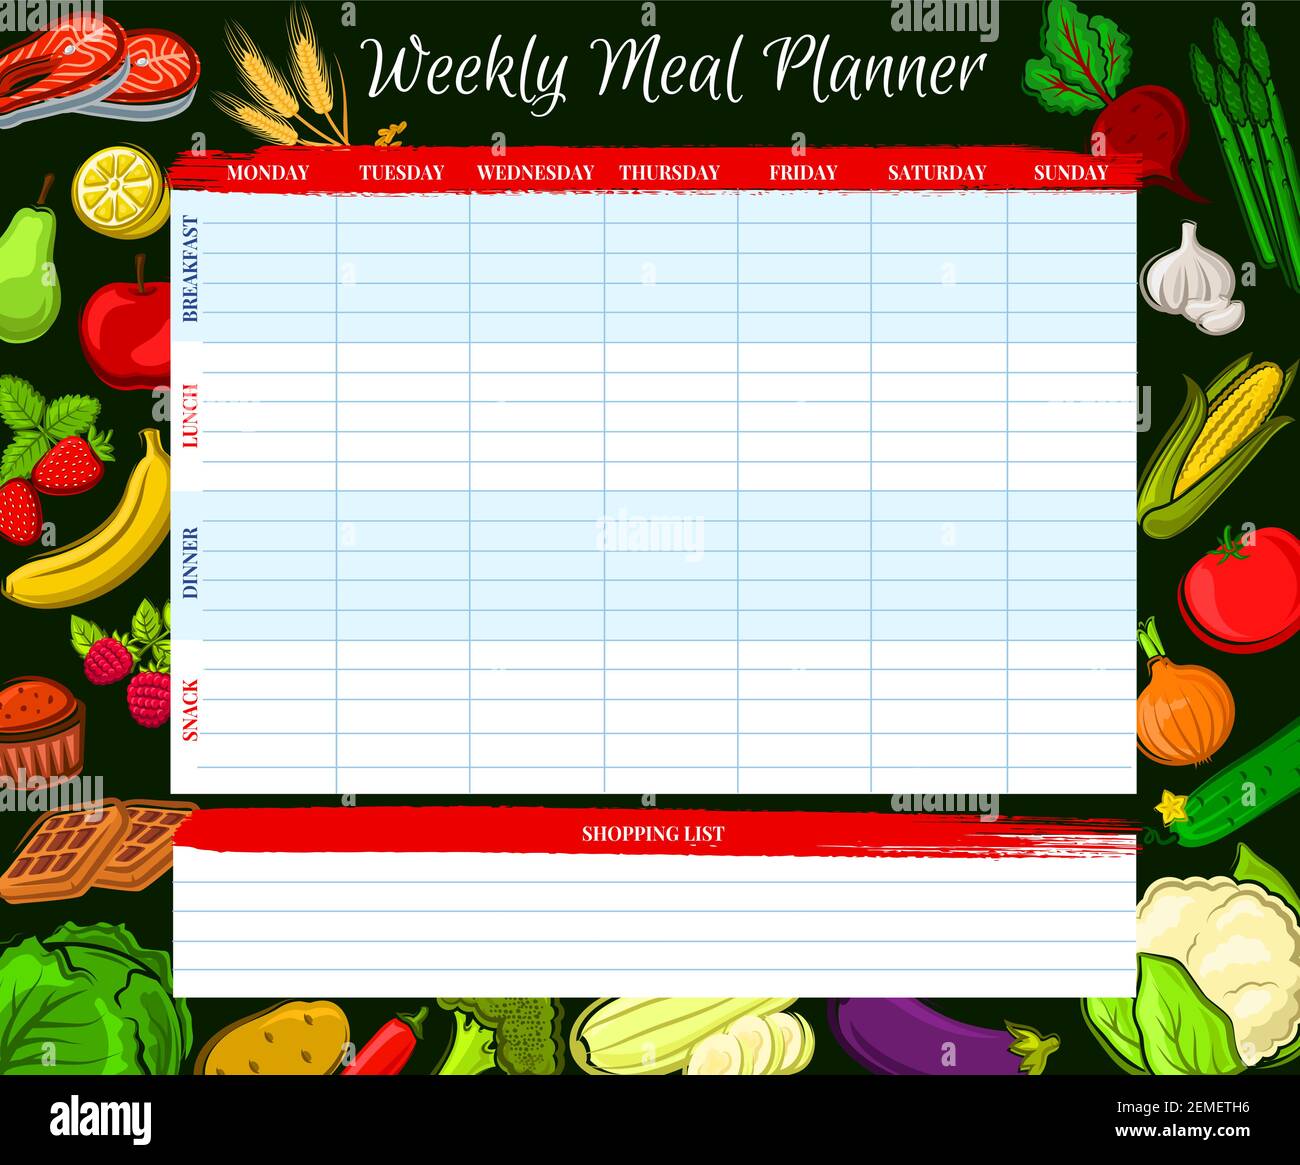 Weekly Meal Planner Affiche - Planning de repas hebdomadaire